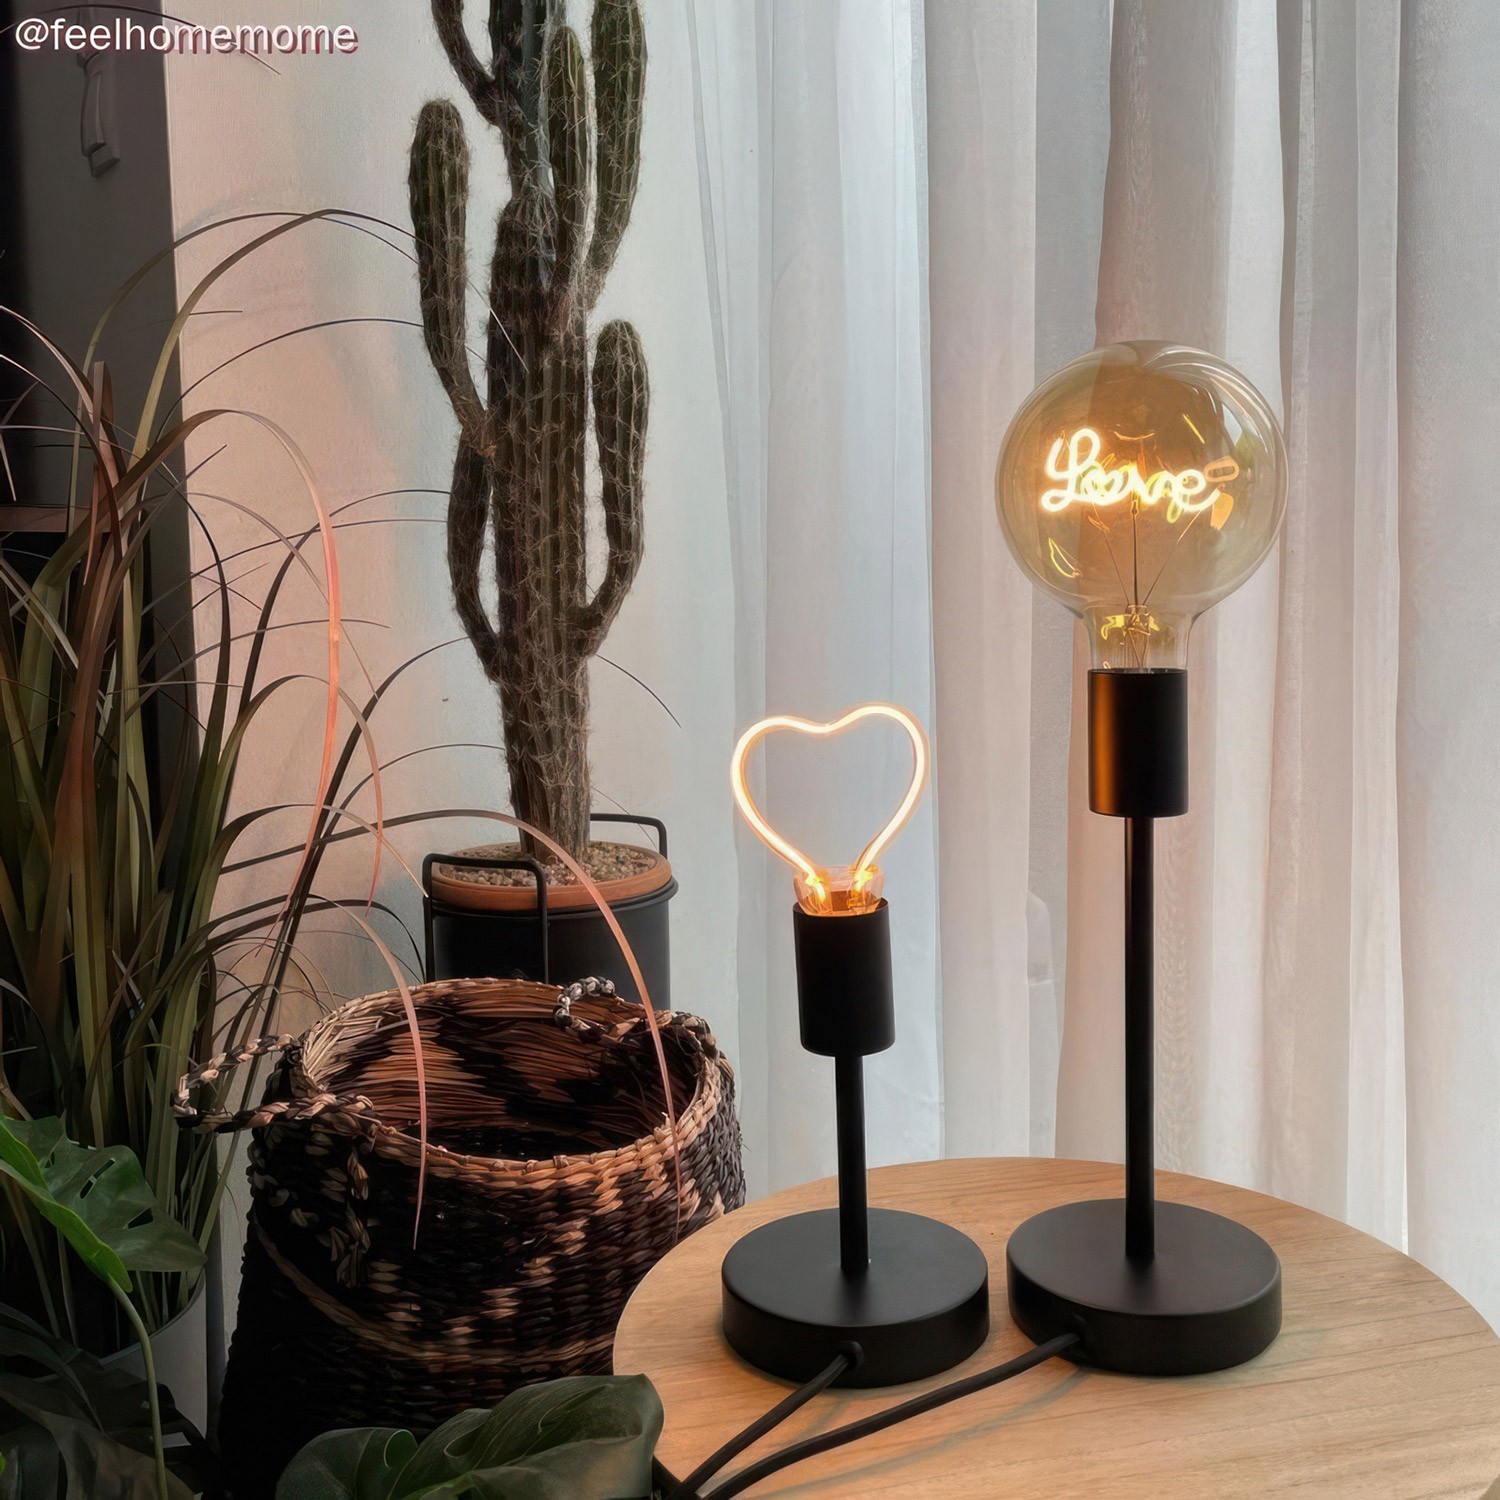 Bombill Globo G125 LED Dorada para lámparas de mesa - Filamento palabra "Love" - LCOLOVE